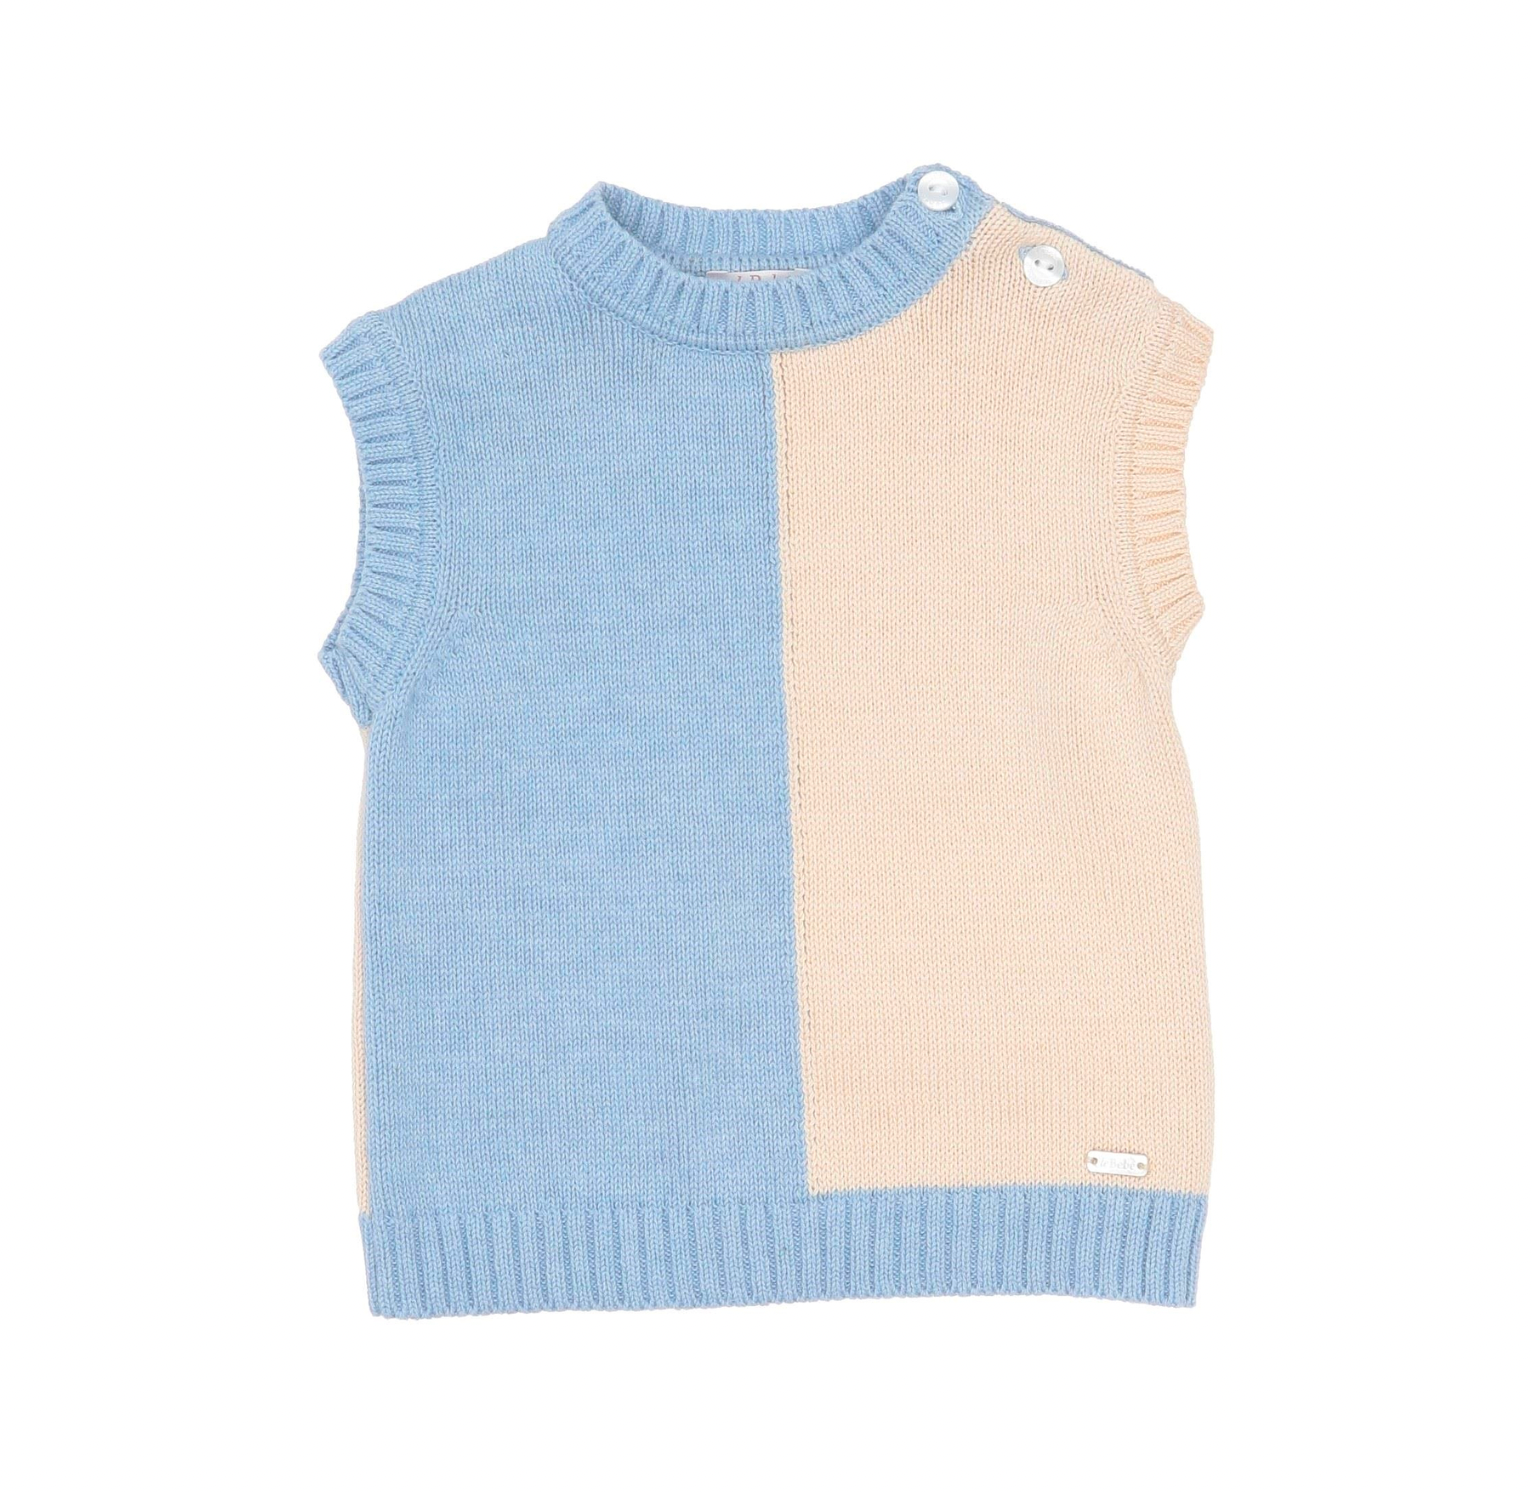 LE BEBE - Blue &amp; white cotton sleeveless jumper - 6 months